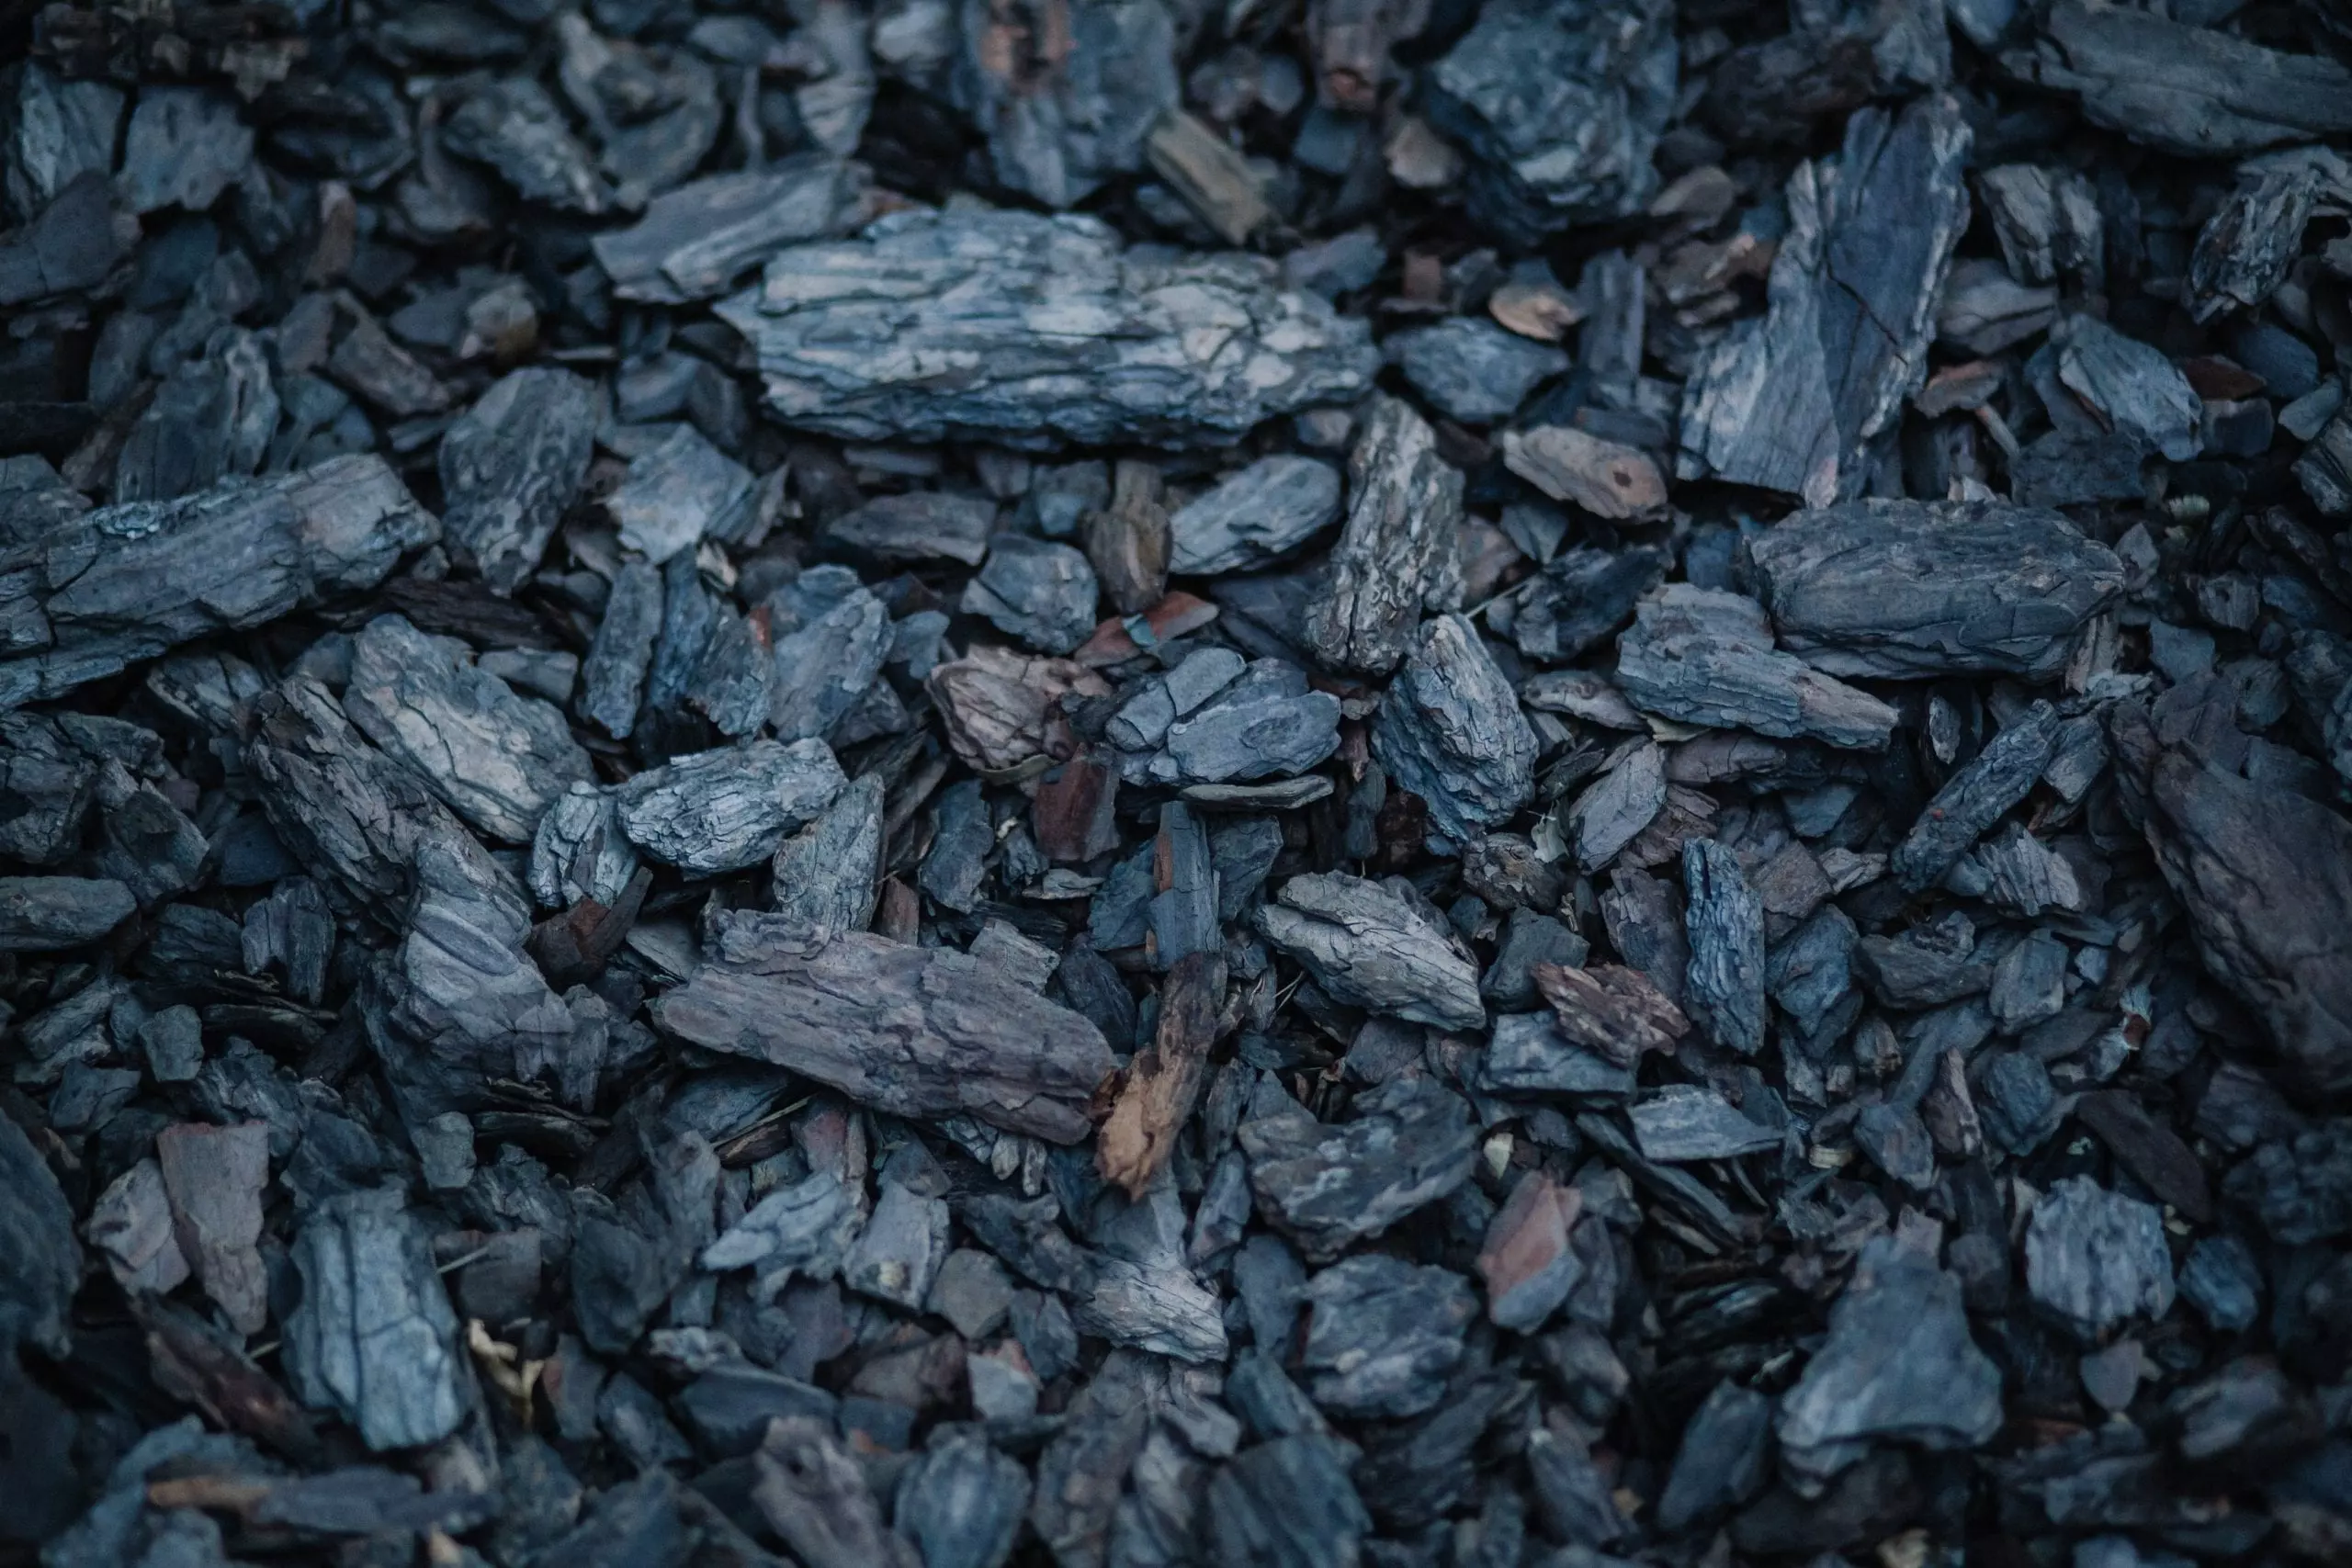 a close up photo of a pile of coal